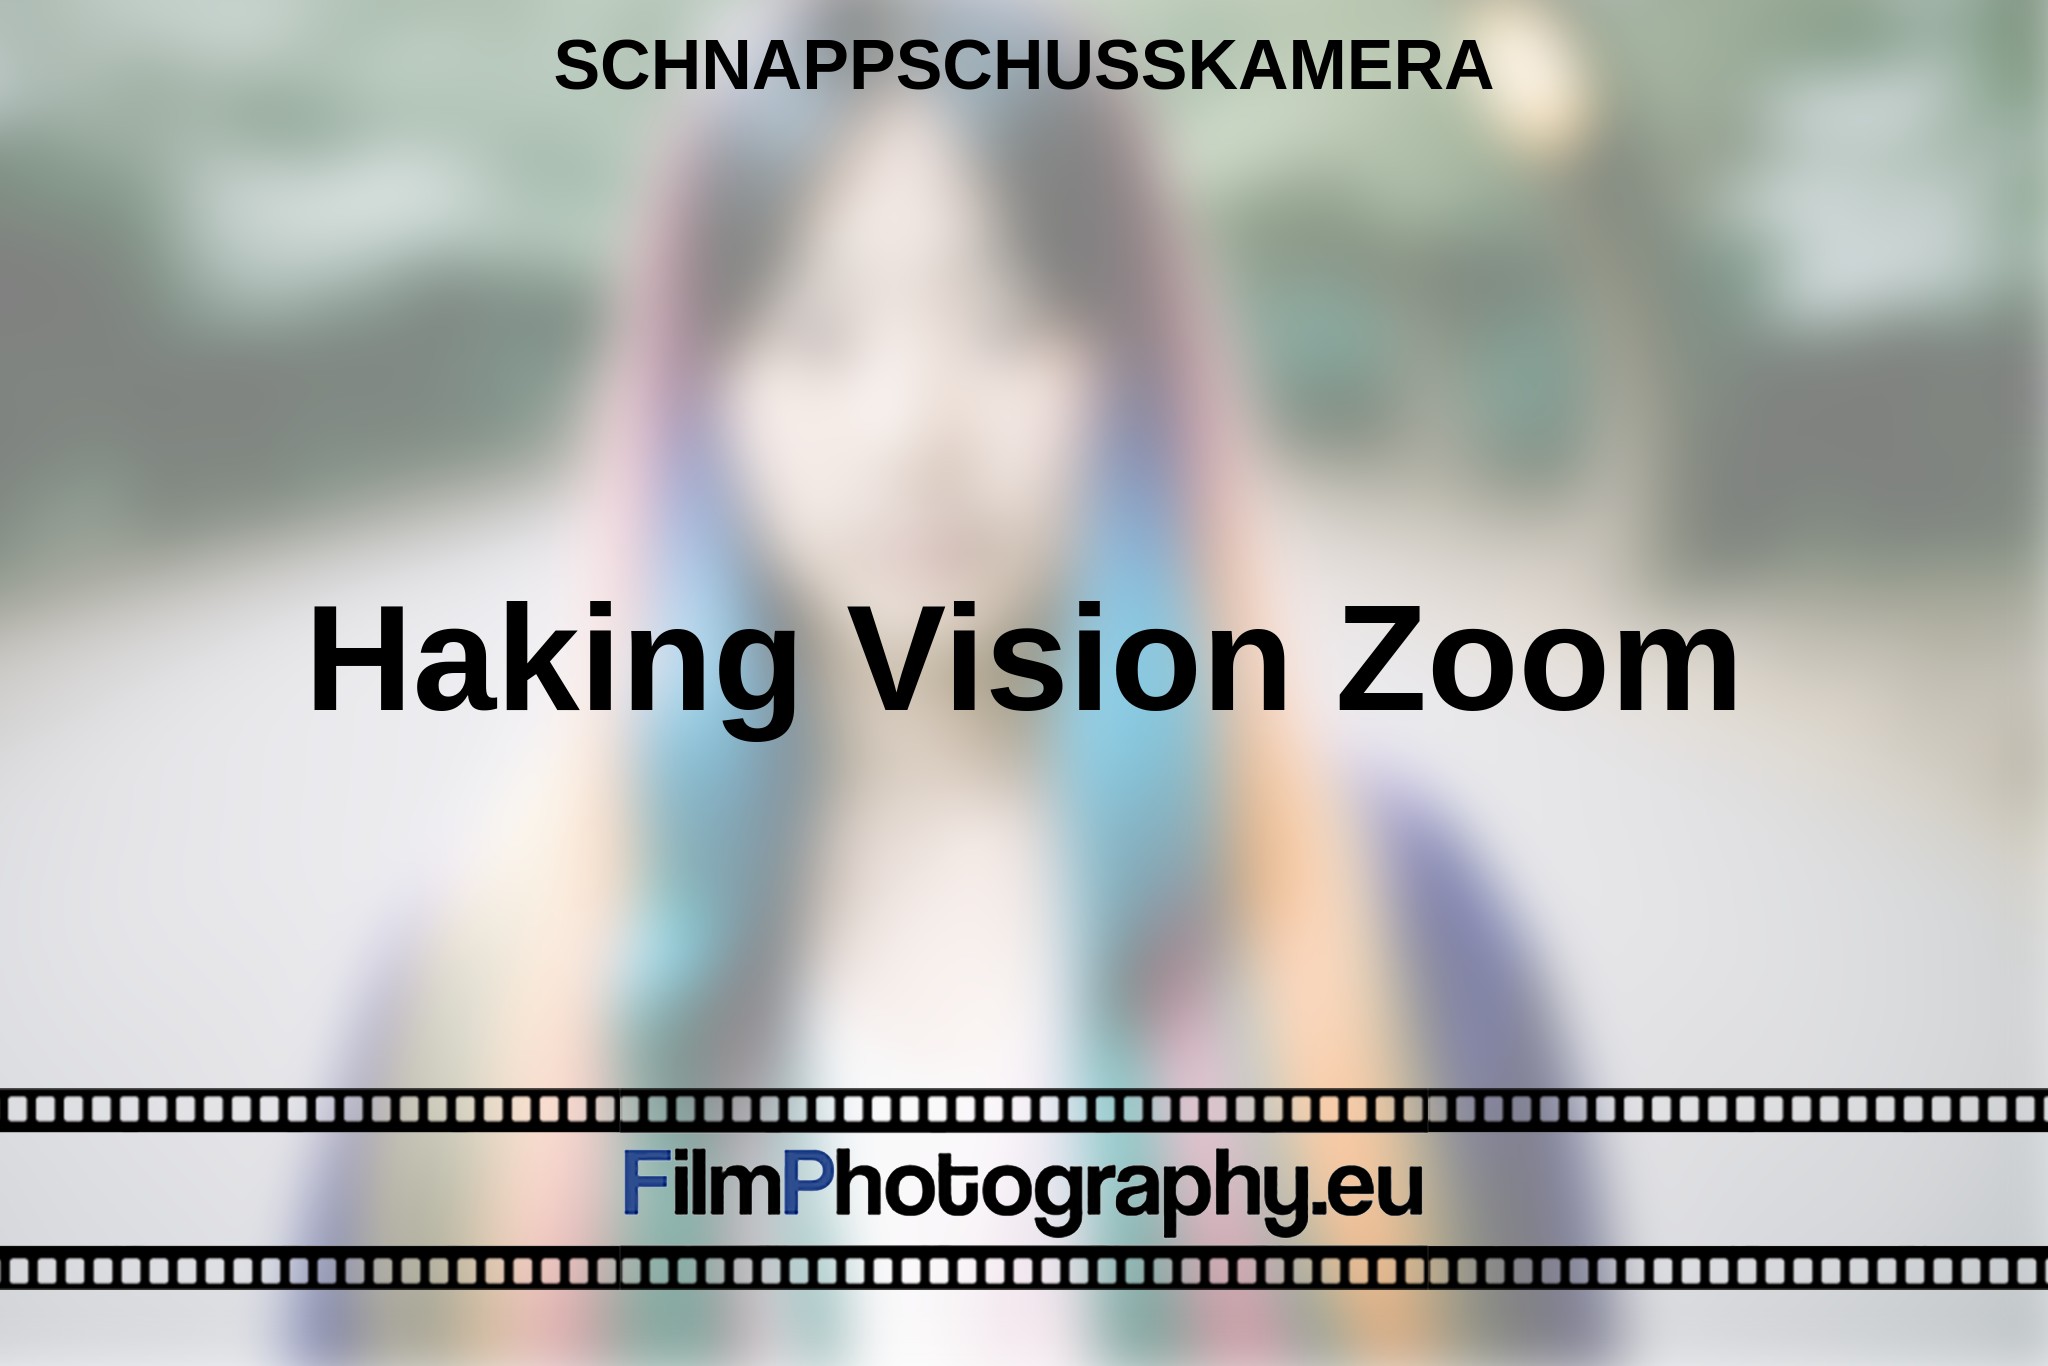 haking-vision-zoom-schnappschusskamera-bnv.jpg